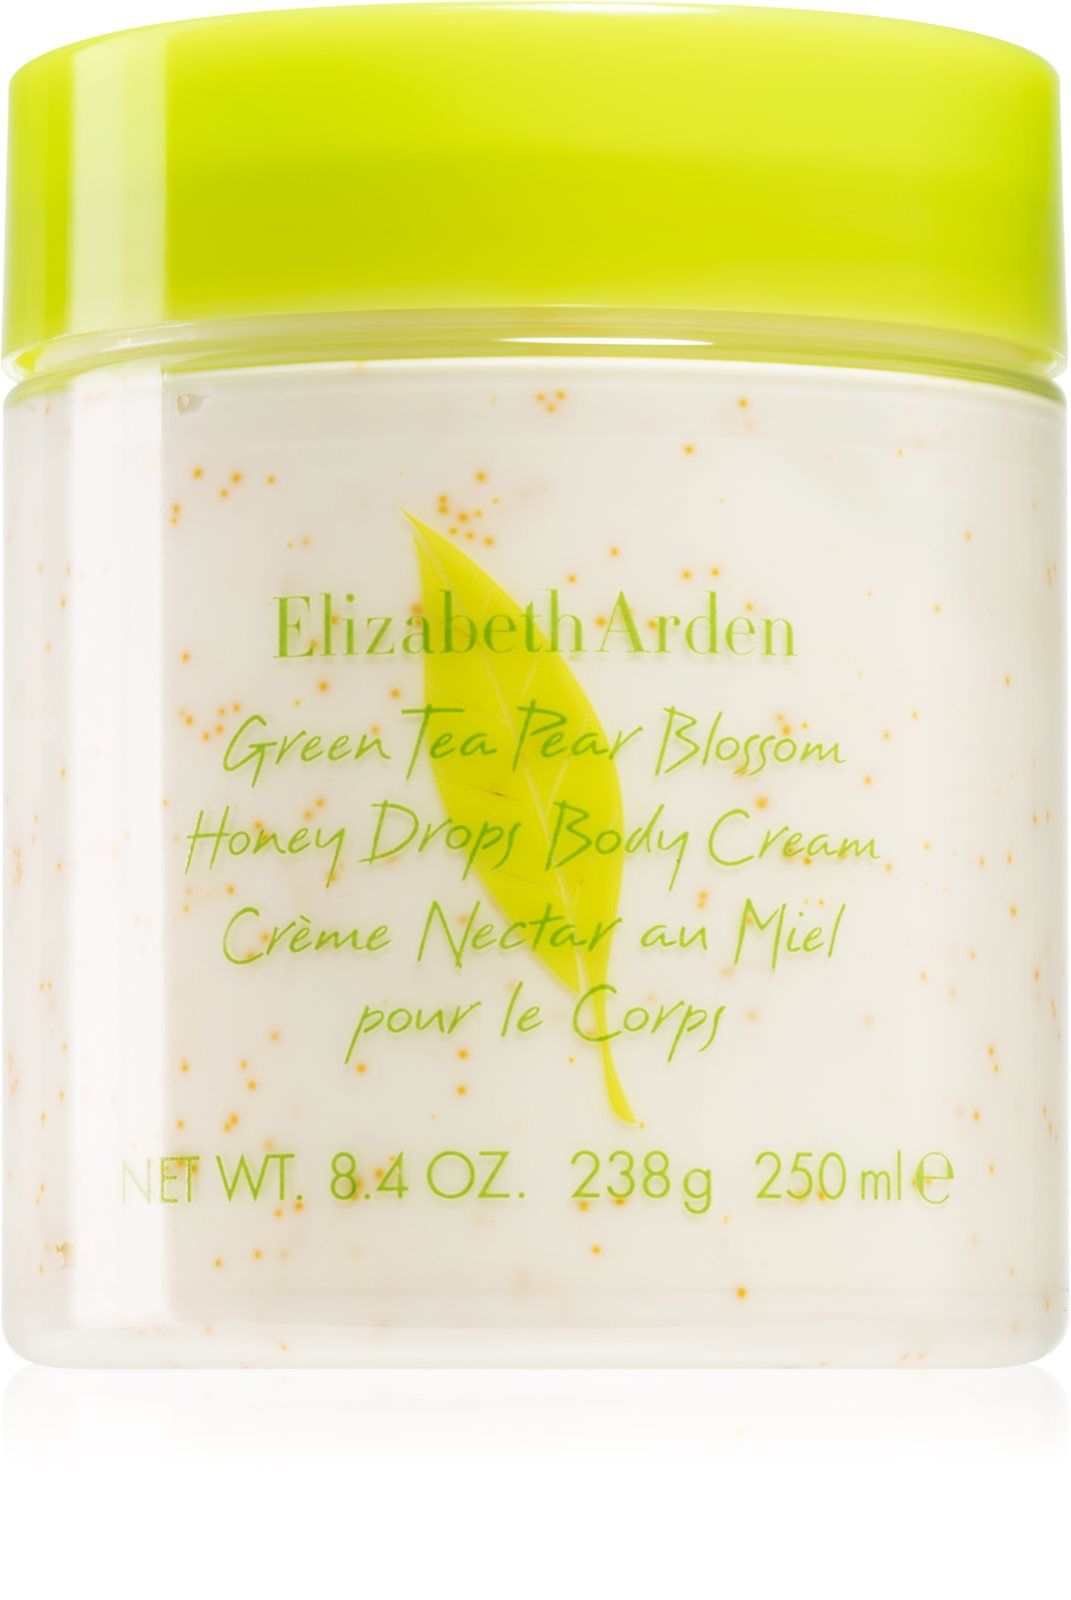 Blossoms крем. Elizabeth Arden Green Tea Pear Blossom. Cactus Blossom крем для тела.